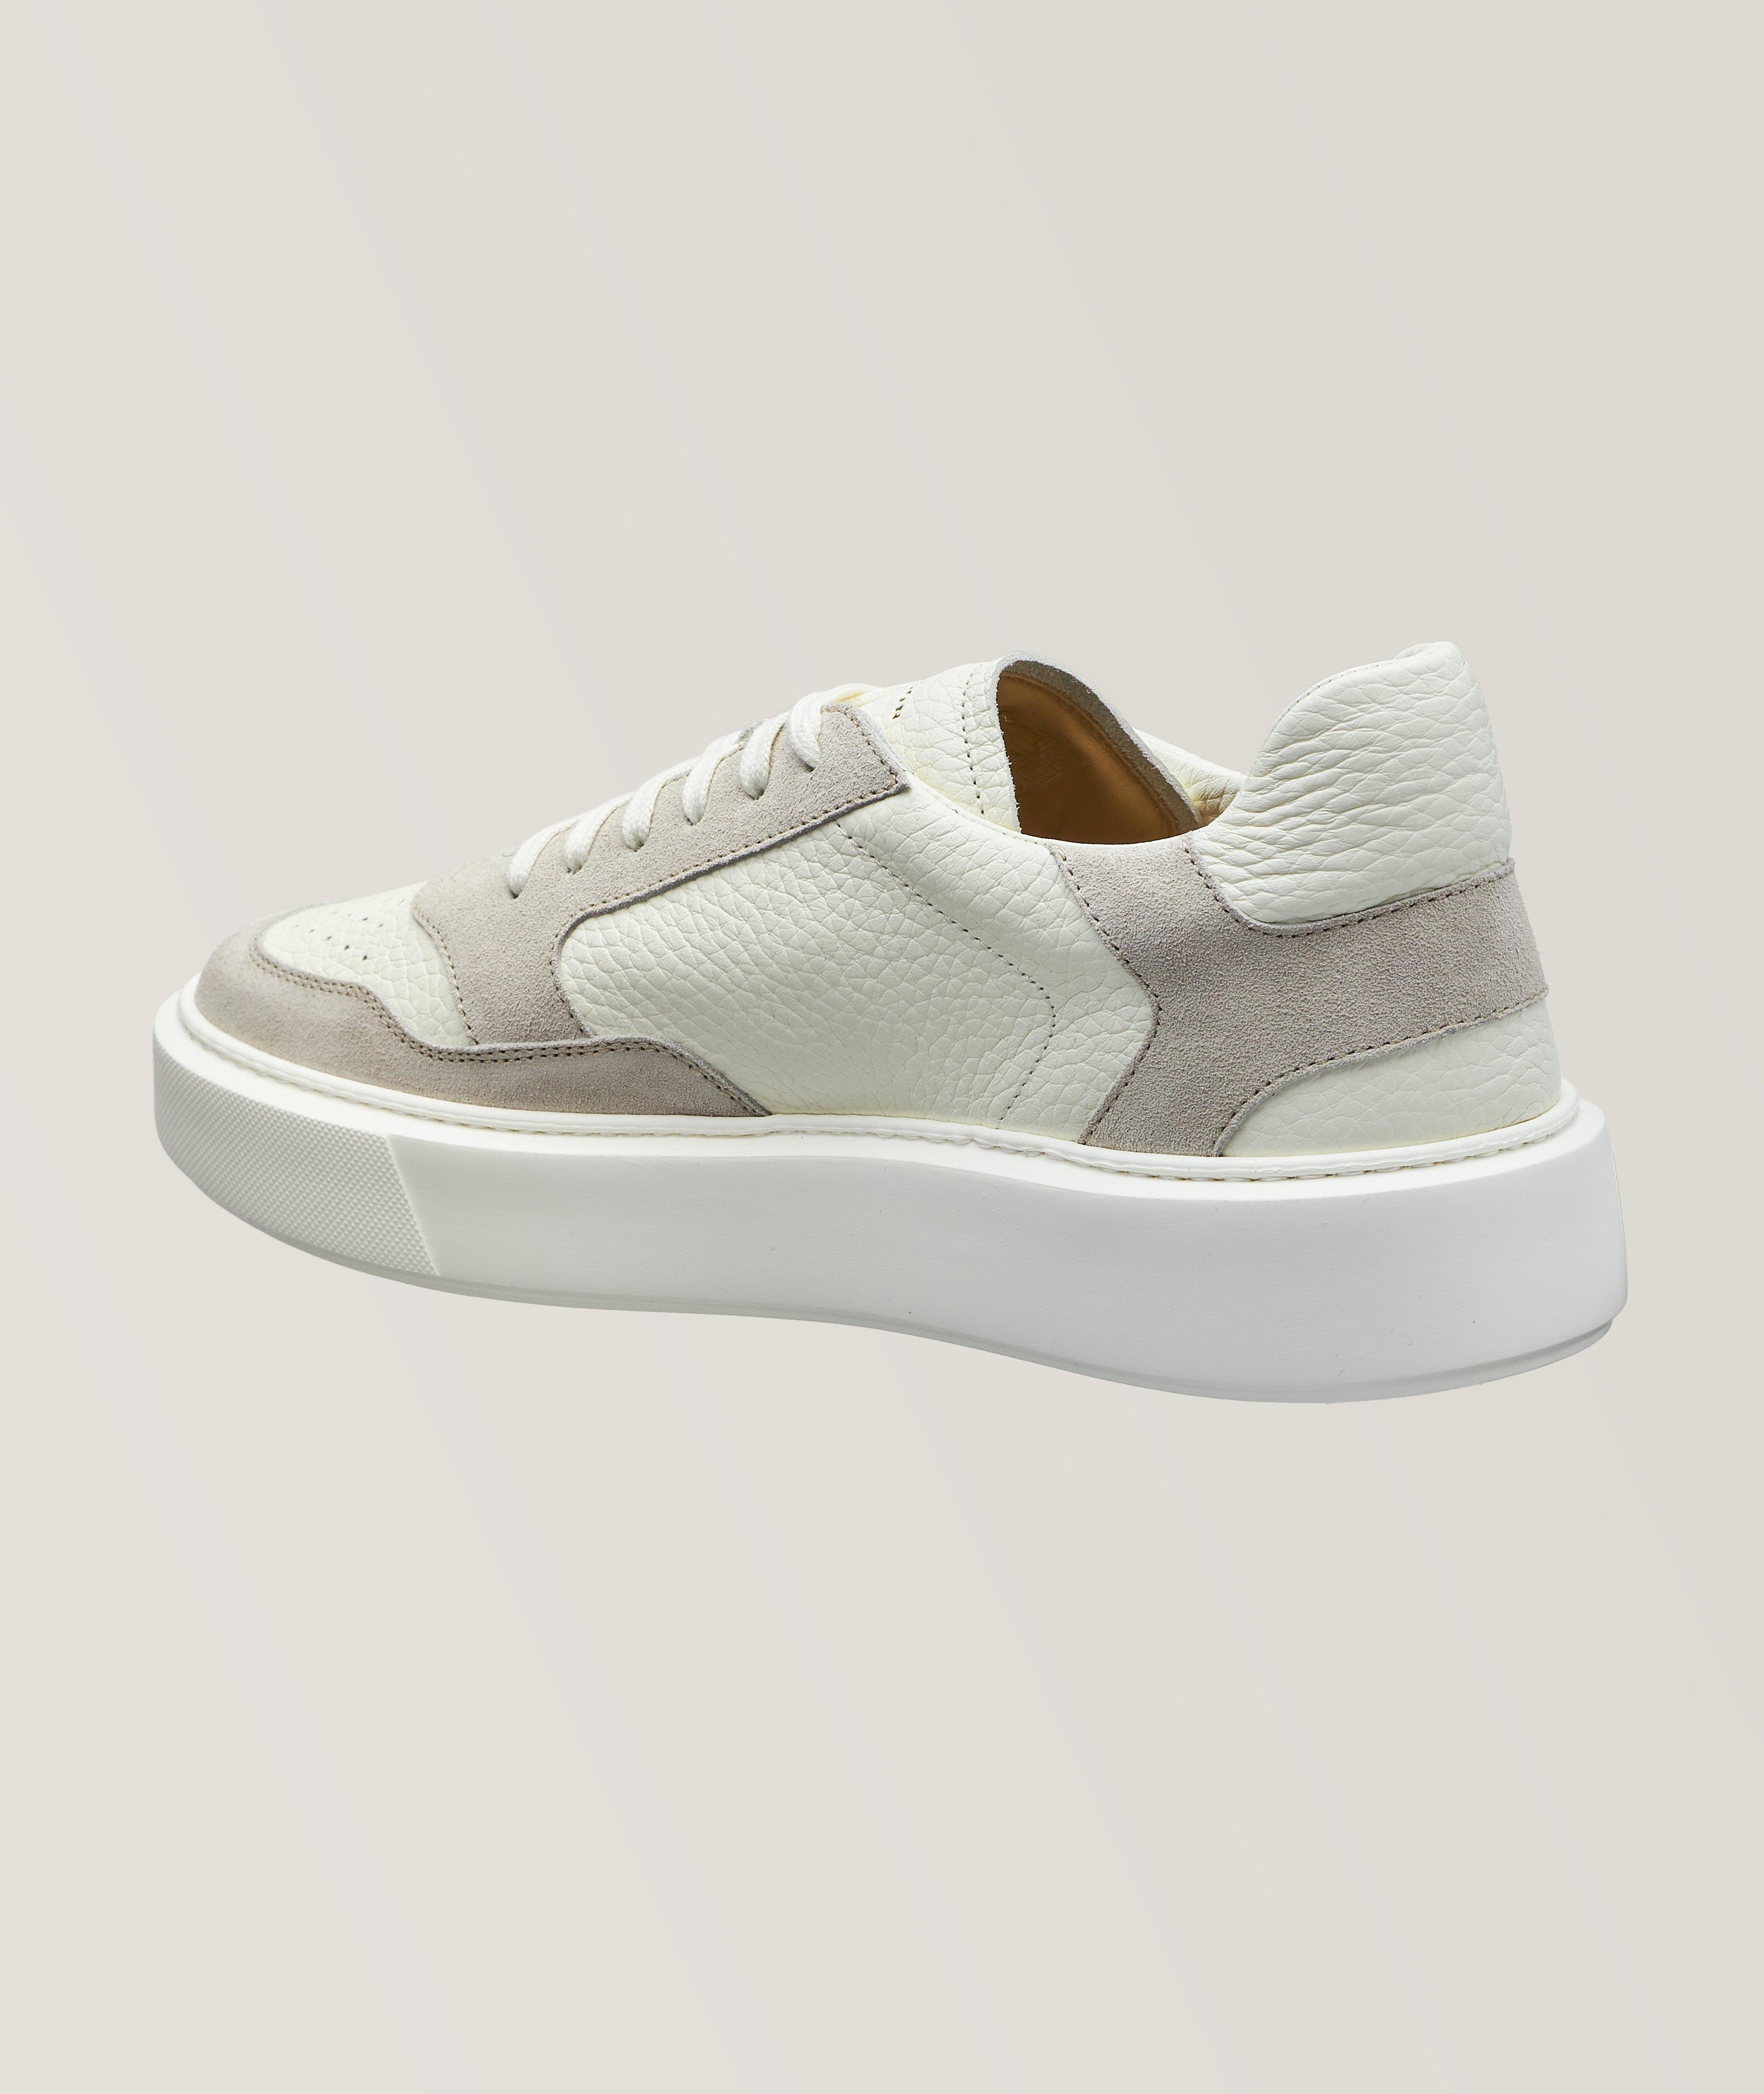 Teseo Sneakers image 1